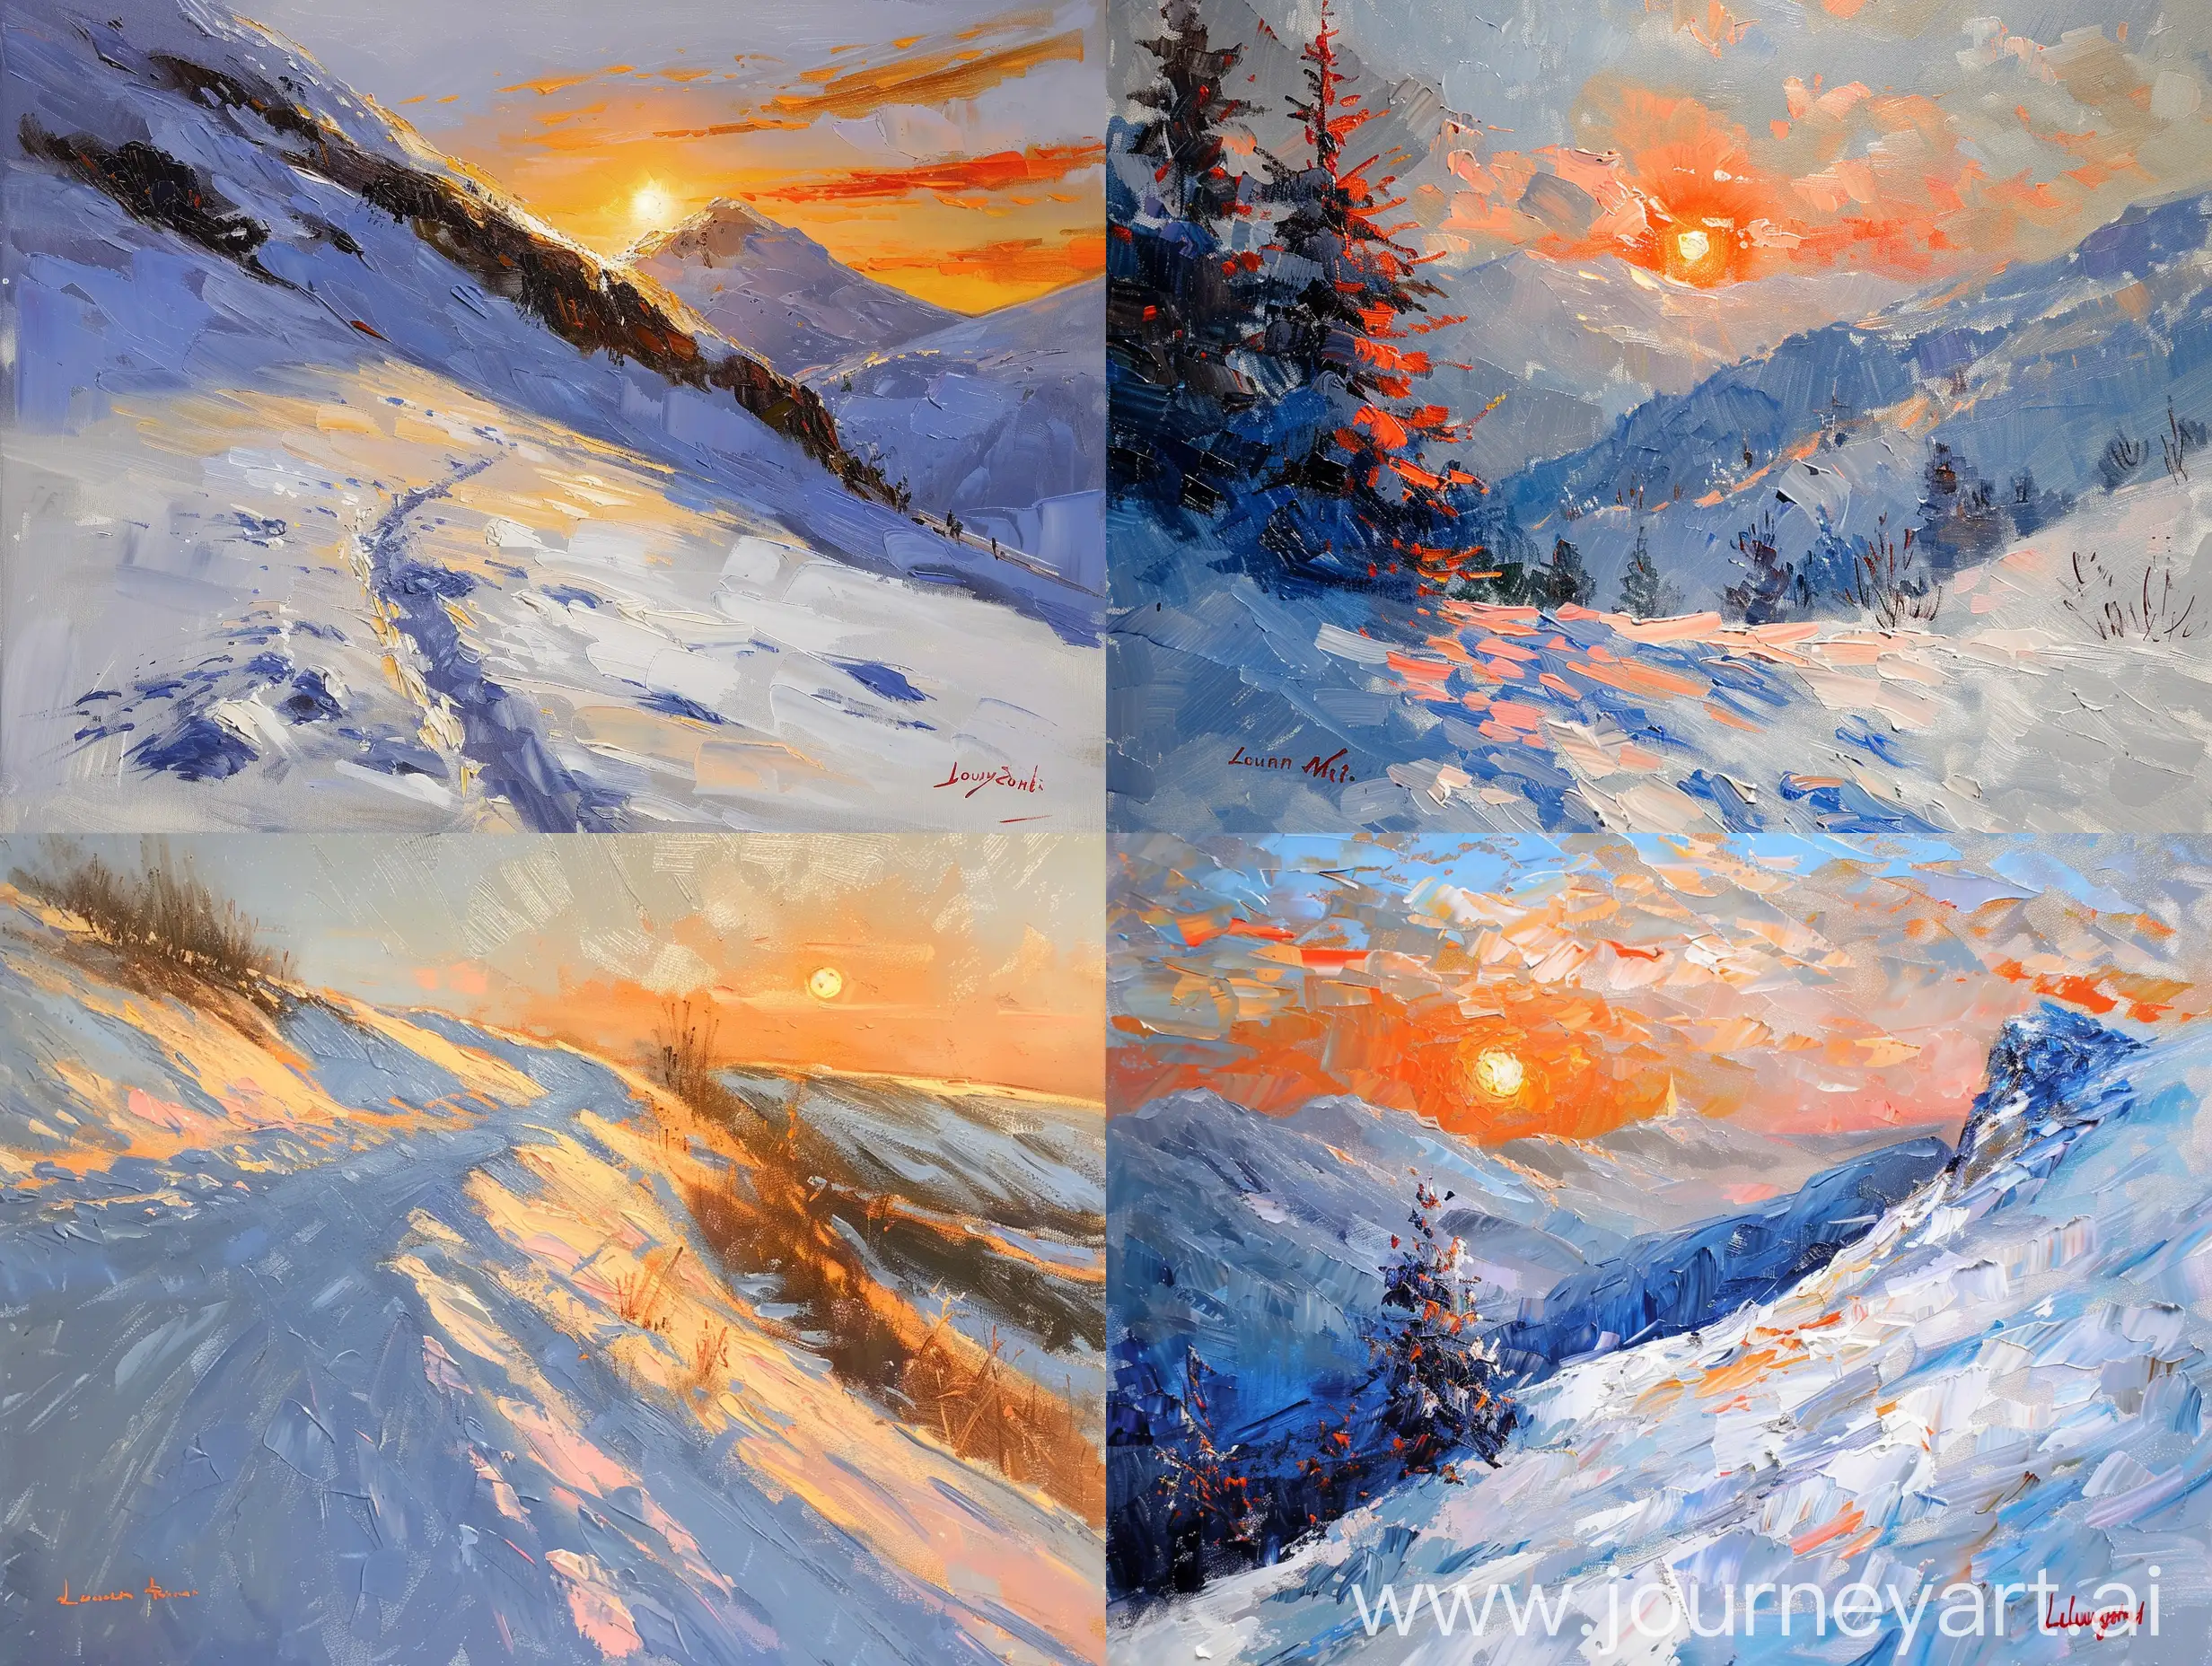 Sunrise-Over-Snowy-Mountain-in-Louis-Aston-Knight-Style